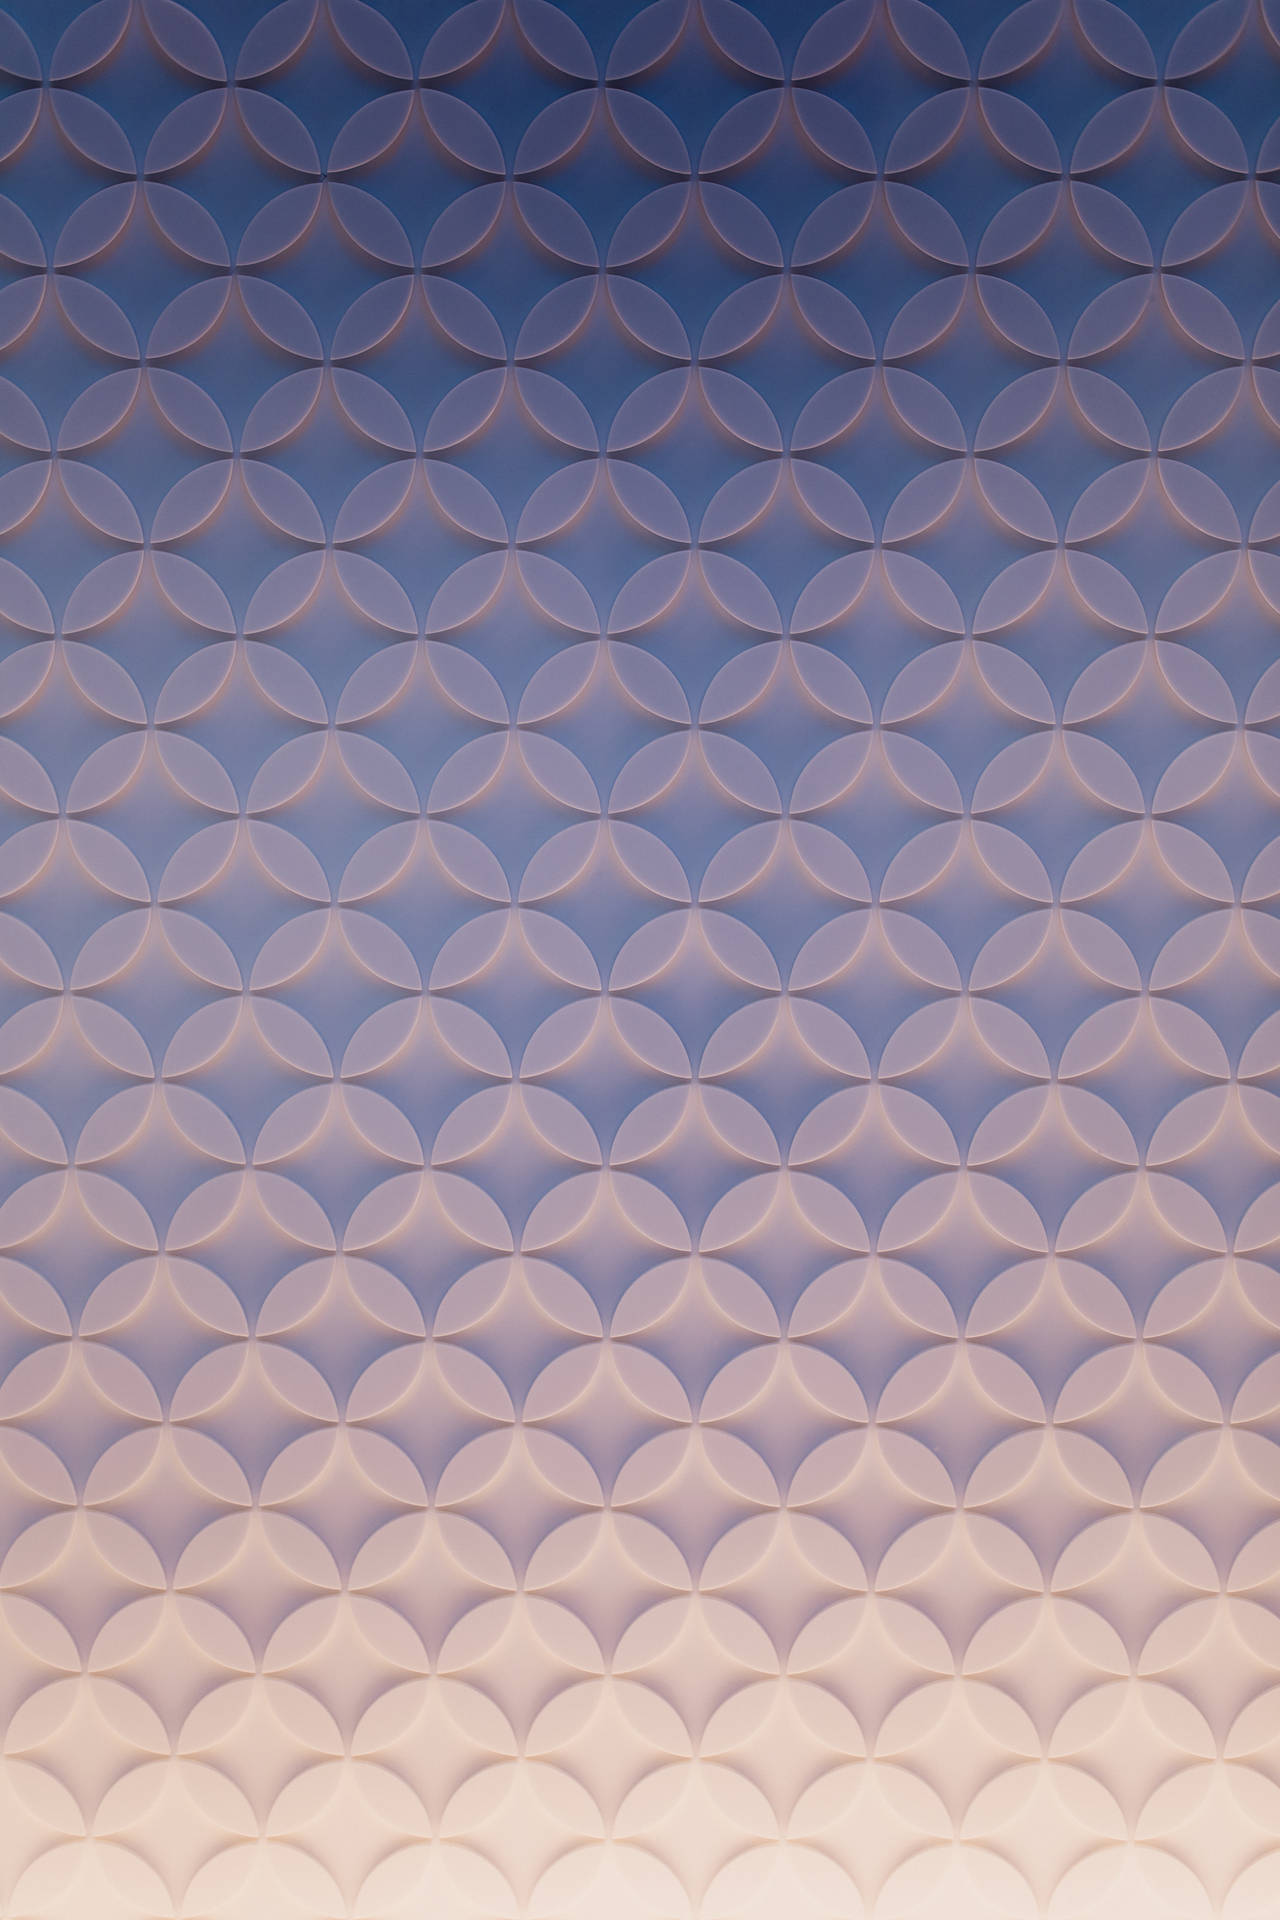 Caption: Pastel Geometric Cool Pattern Background